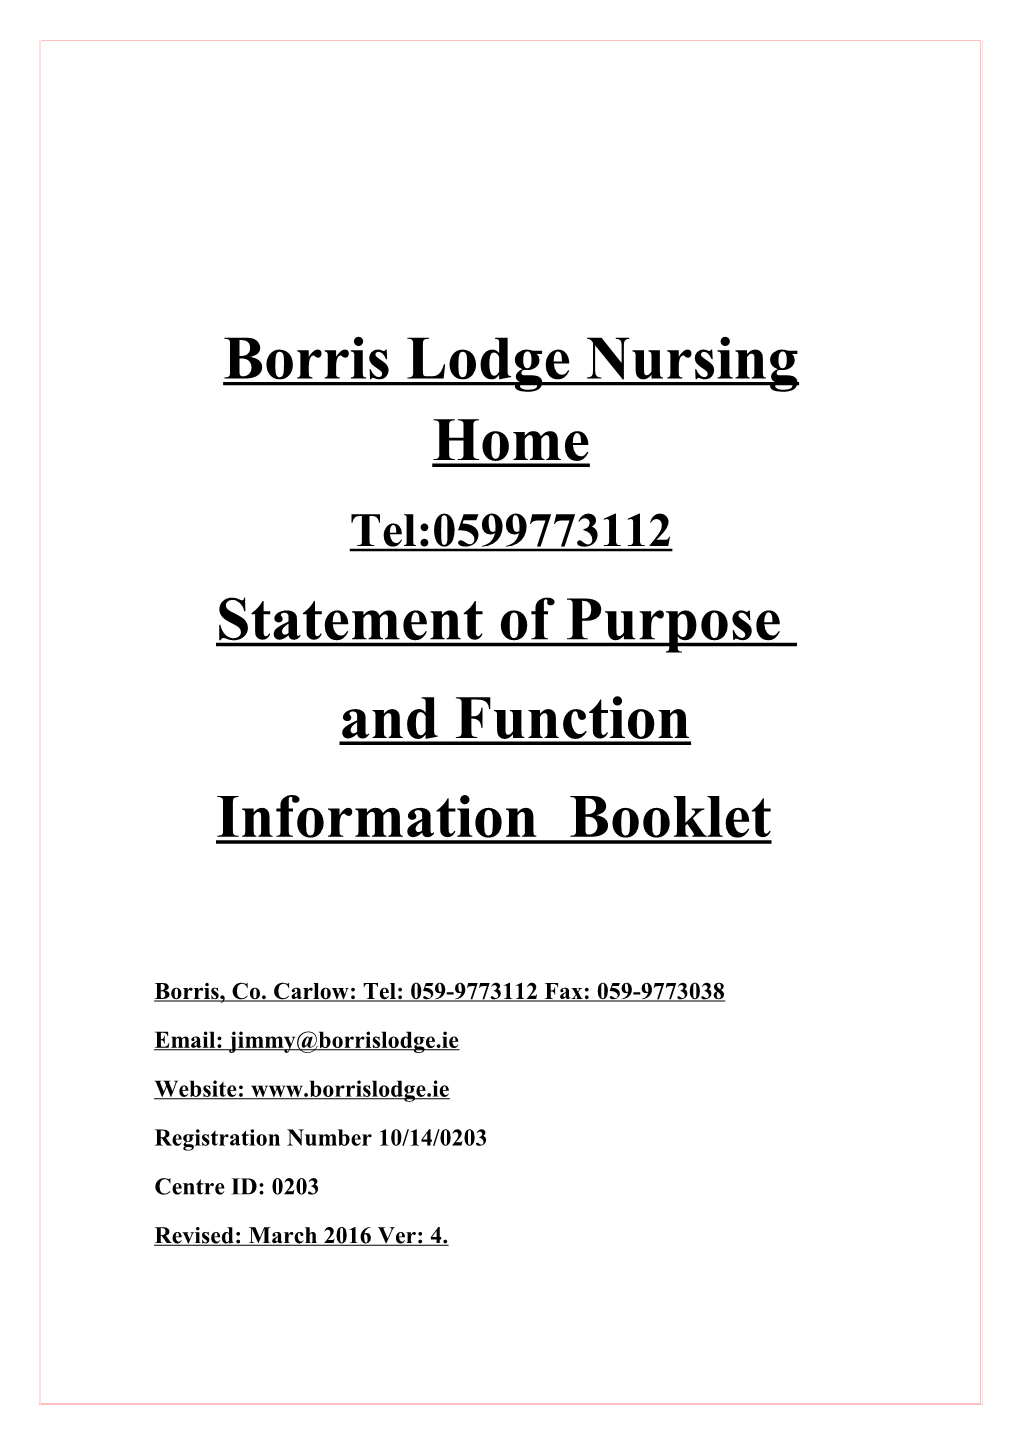 Borris Lodge Nursing Home